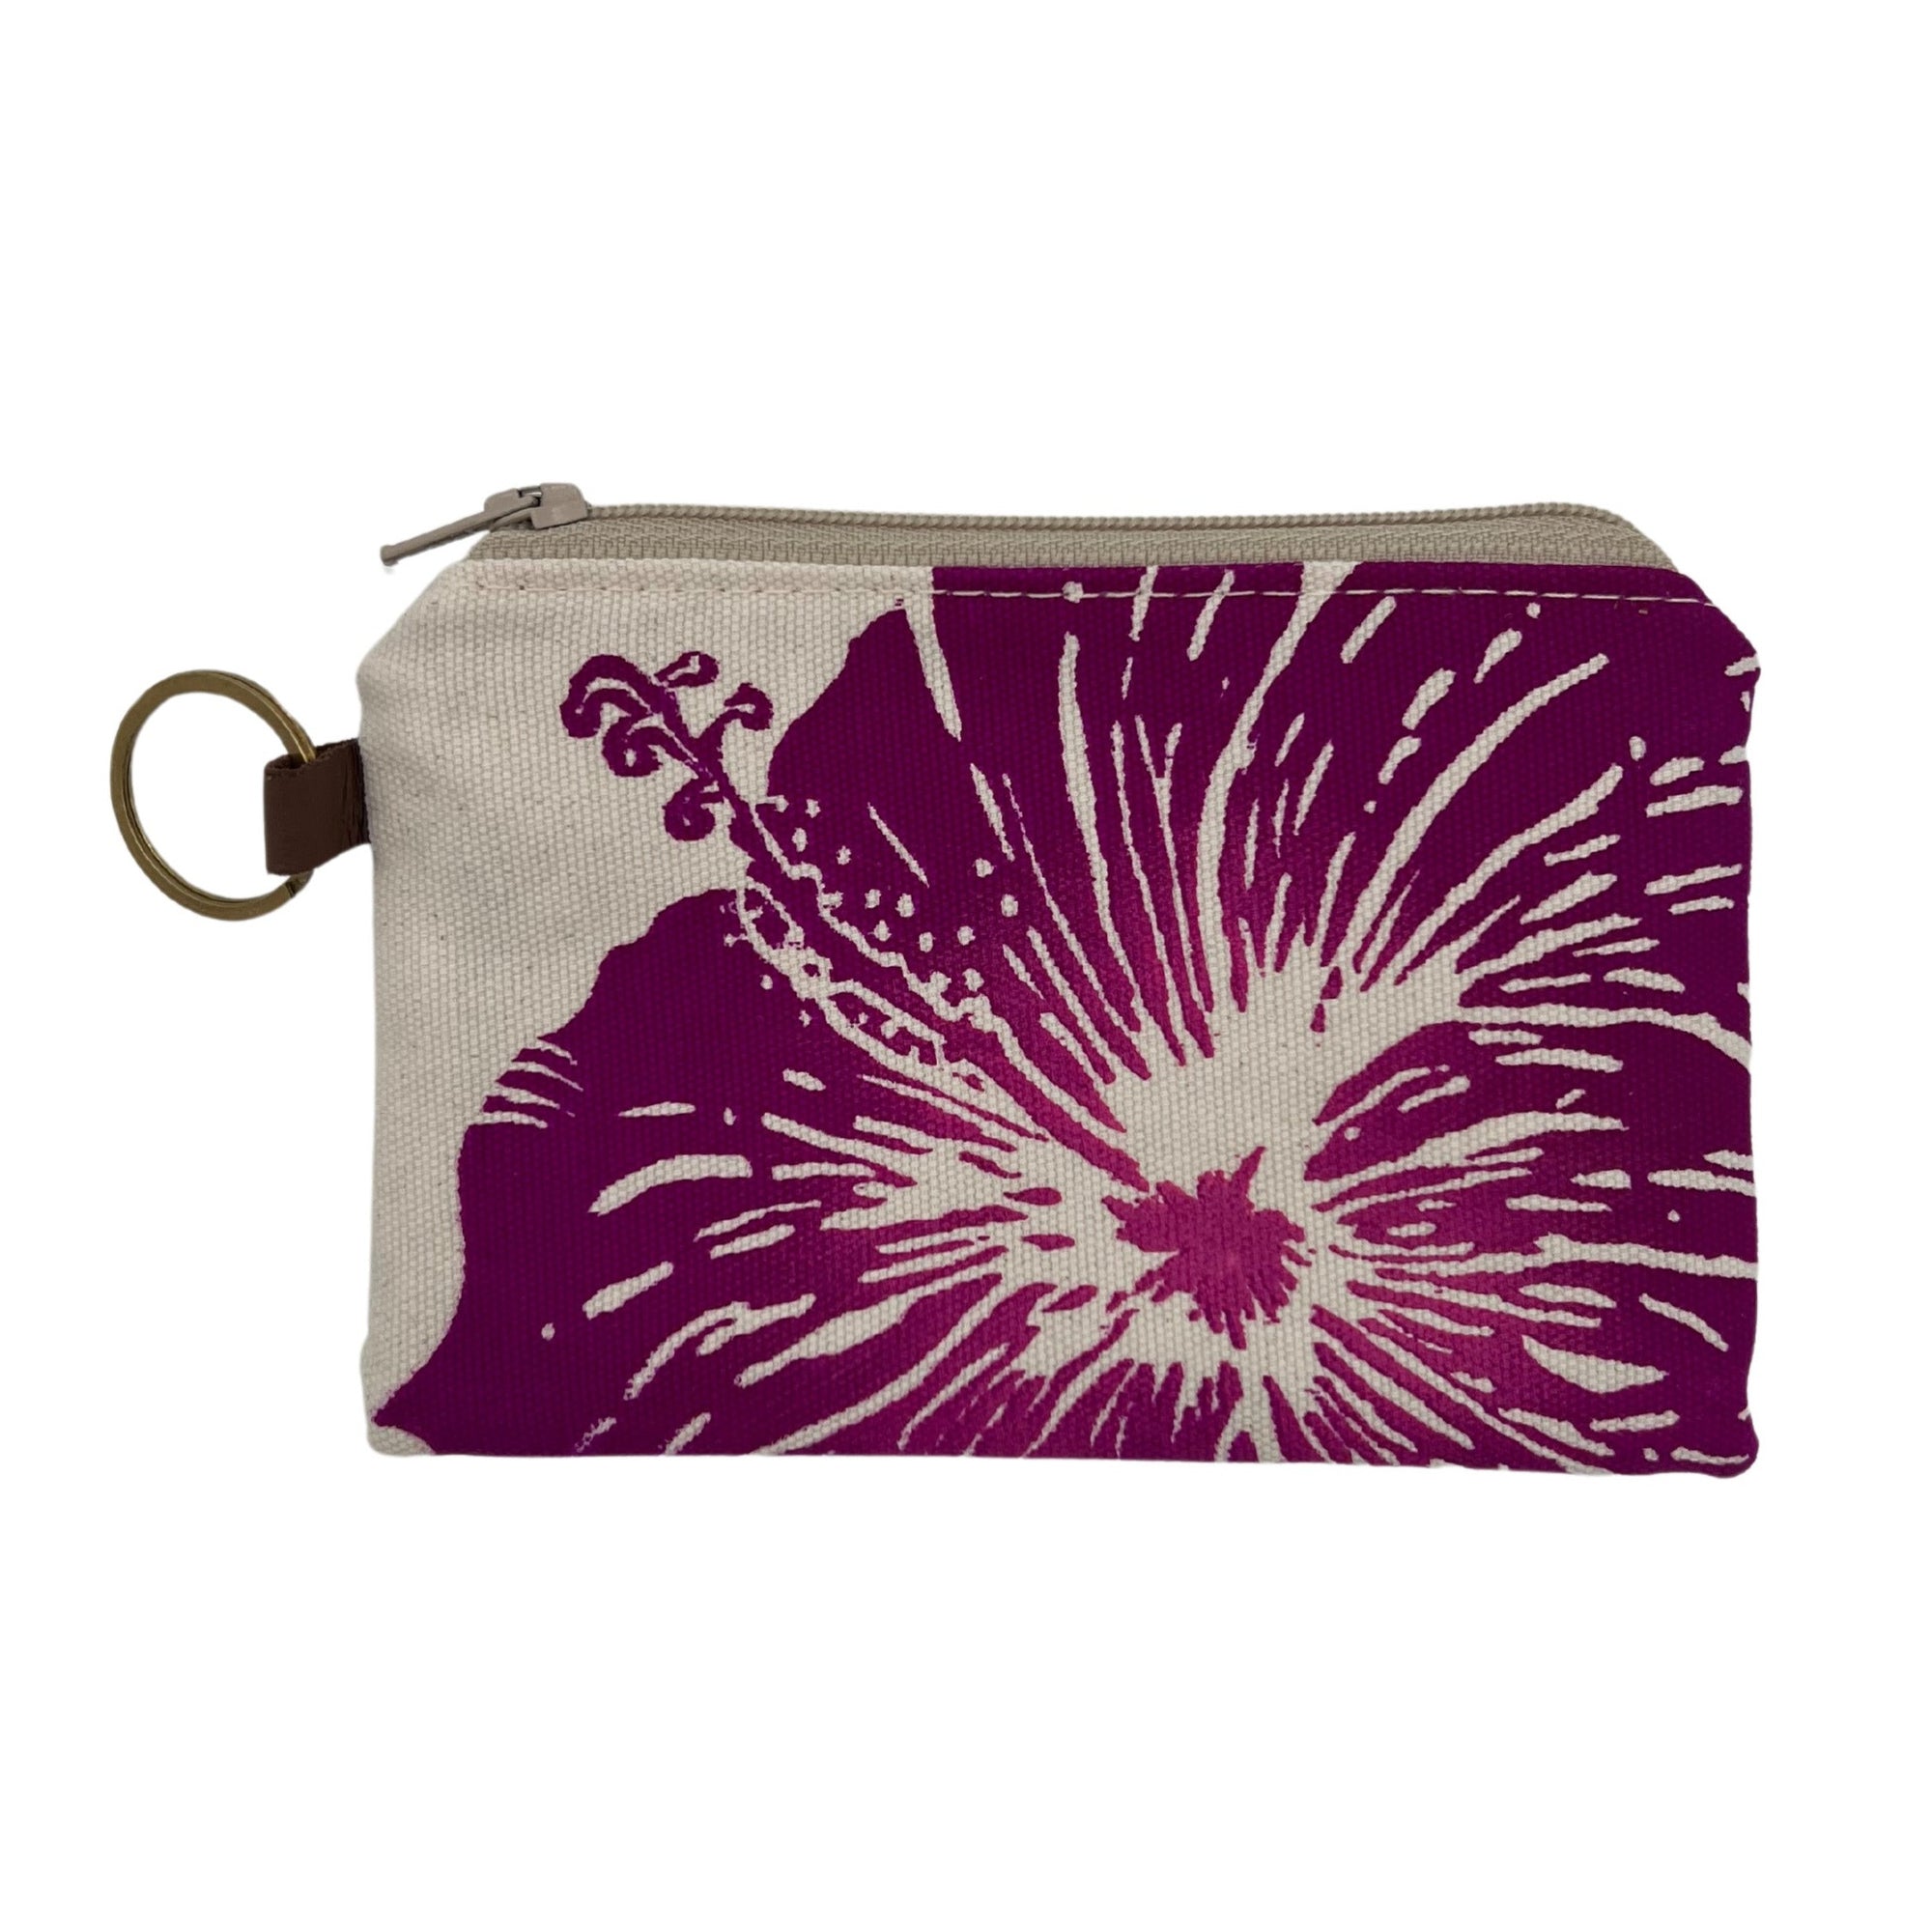 Pop-Up Mākeke - A Maui Day Original Handbags - Handprinted Mini Handbag - Purple Hibiscus on Canvas - Front View